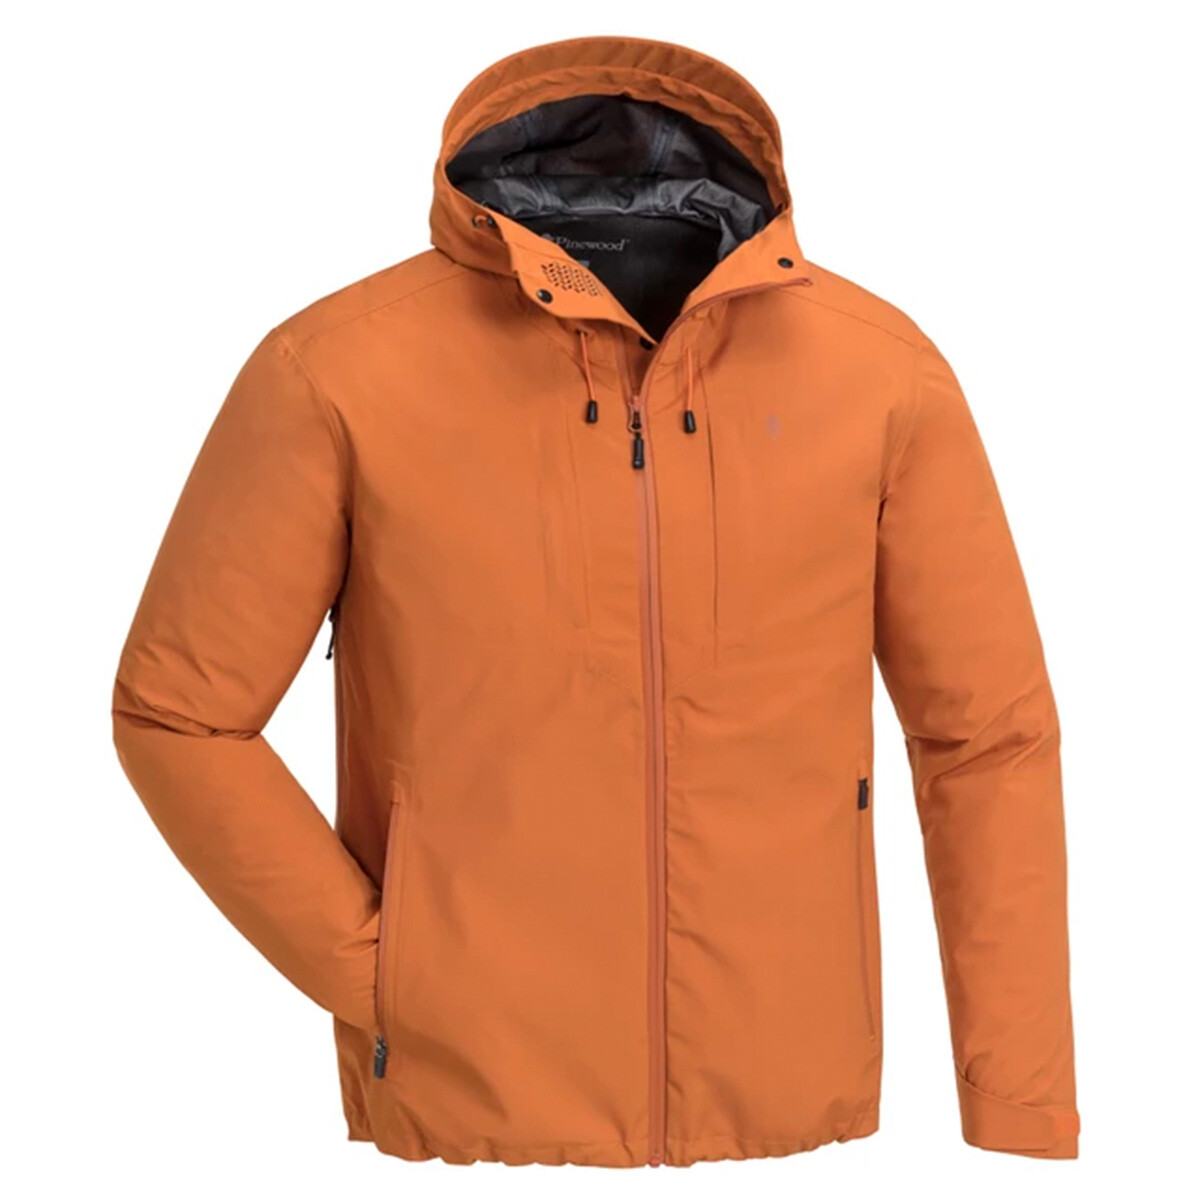 Se Pinewood Telluz jakke (Burned Orange, XL) hos Specialbutikken